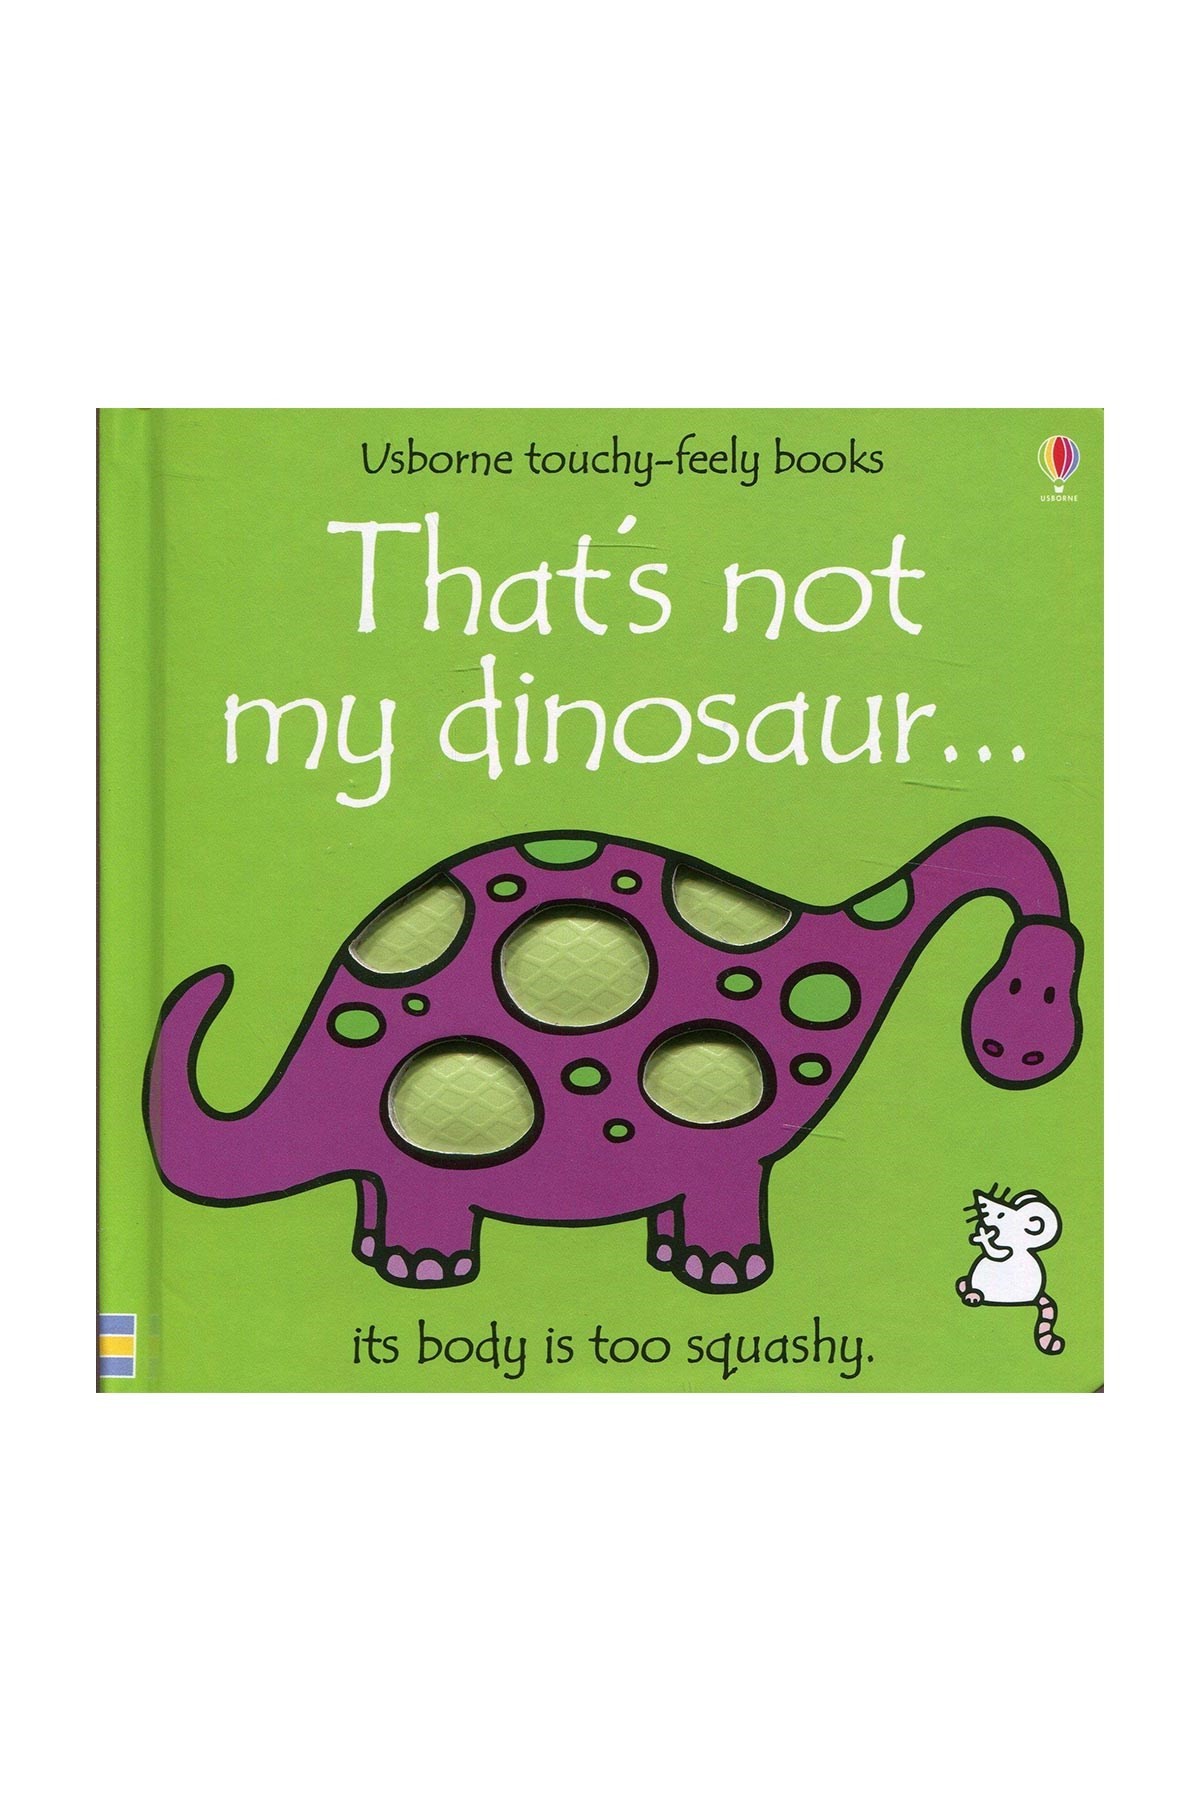 The Usborne That'S Not My Dinosaur